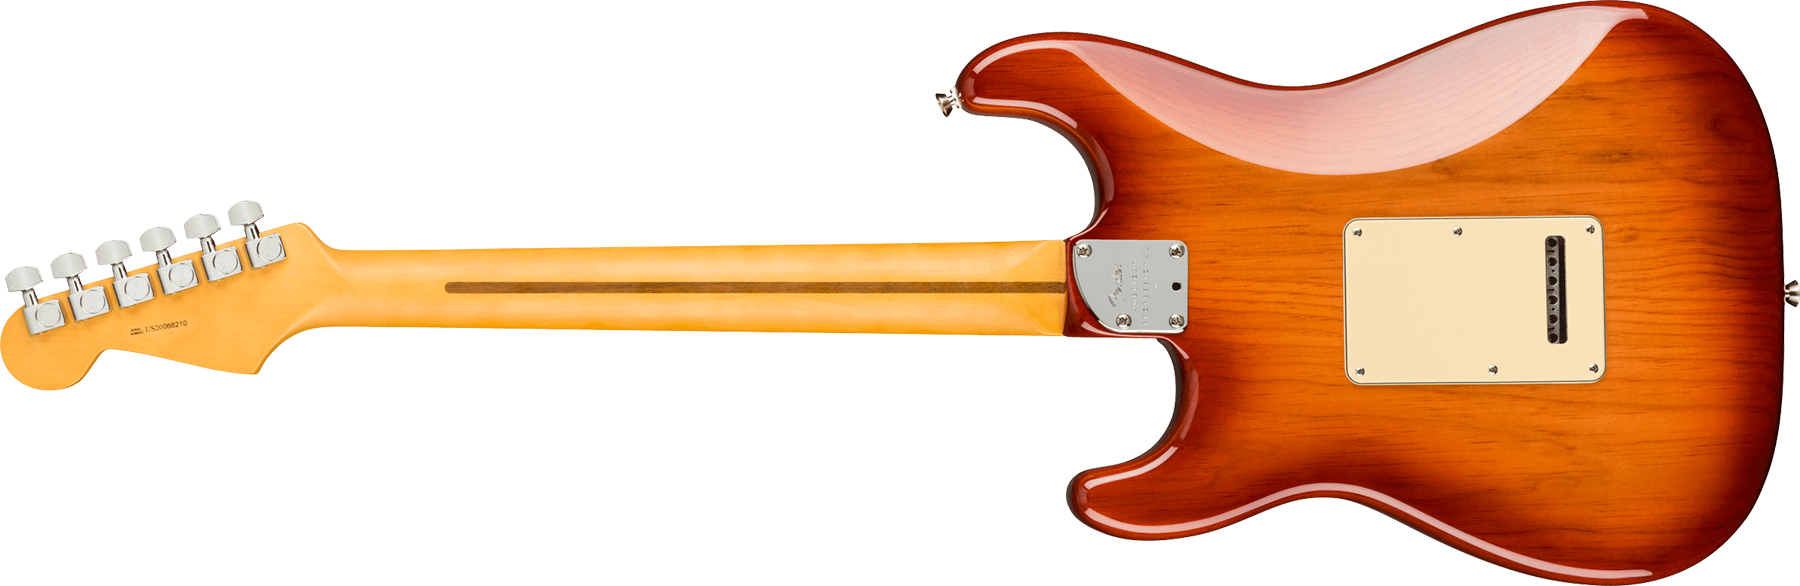 Fender Strat American Professional Ii Usa Mn - Sienna Sunburst - Str shape electric guitar - Variation 1